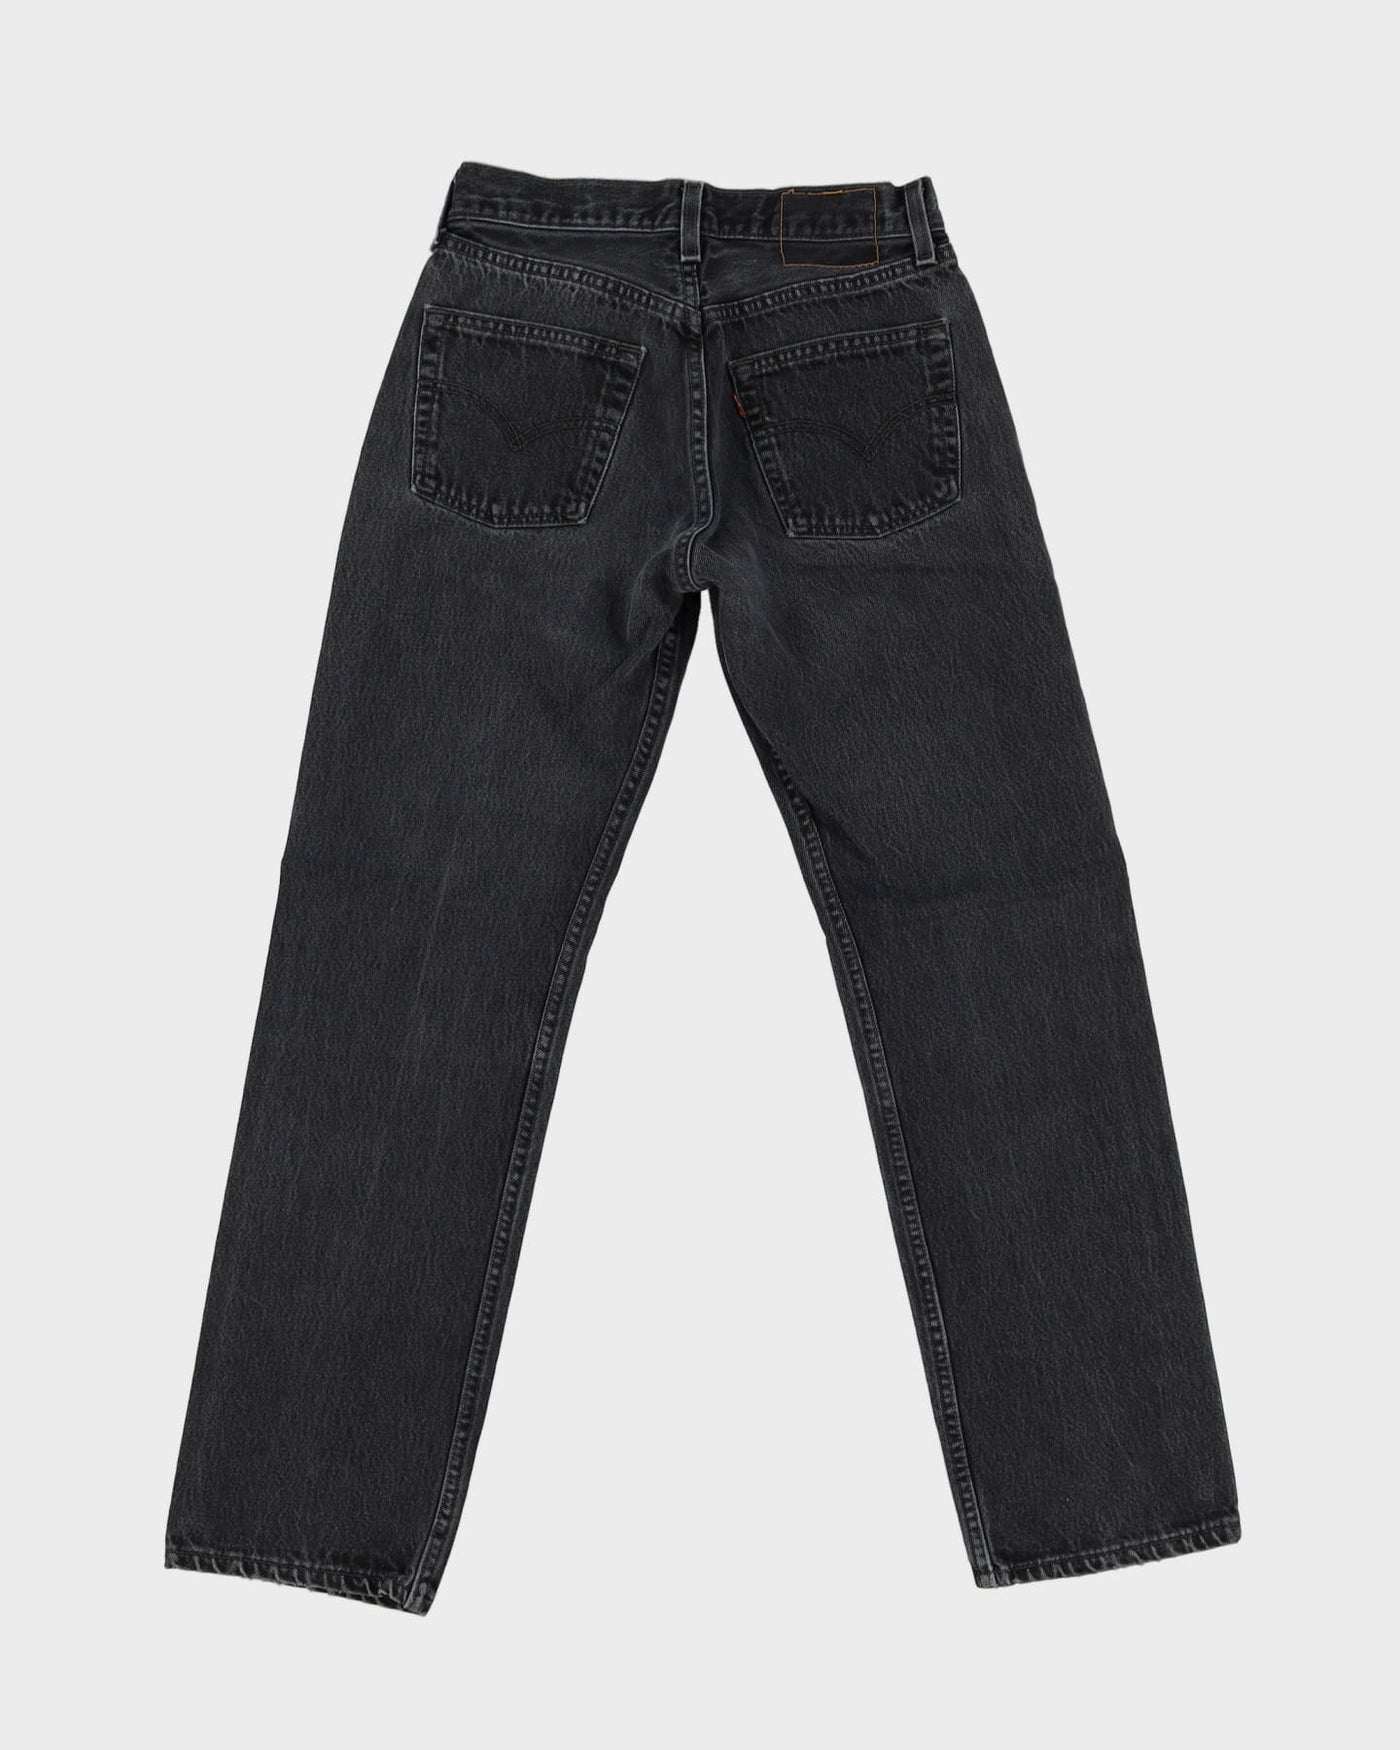 Vintage 90s Levi's 501 Grey Dark Wash Jeans - W28 L30